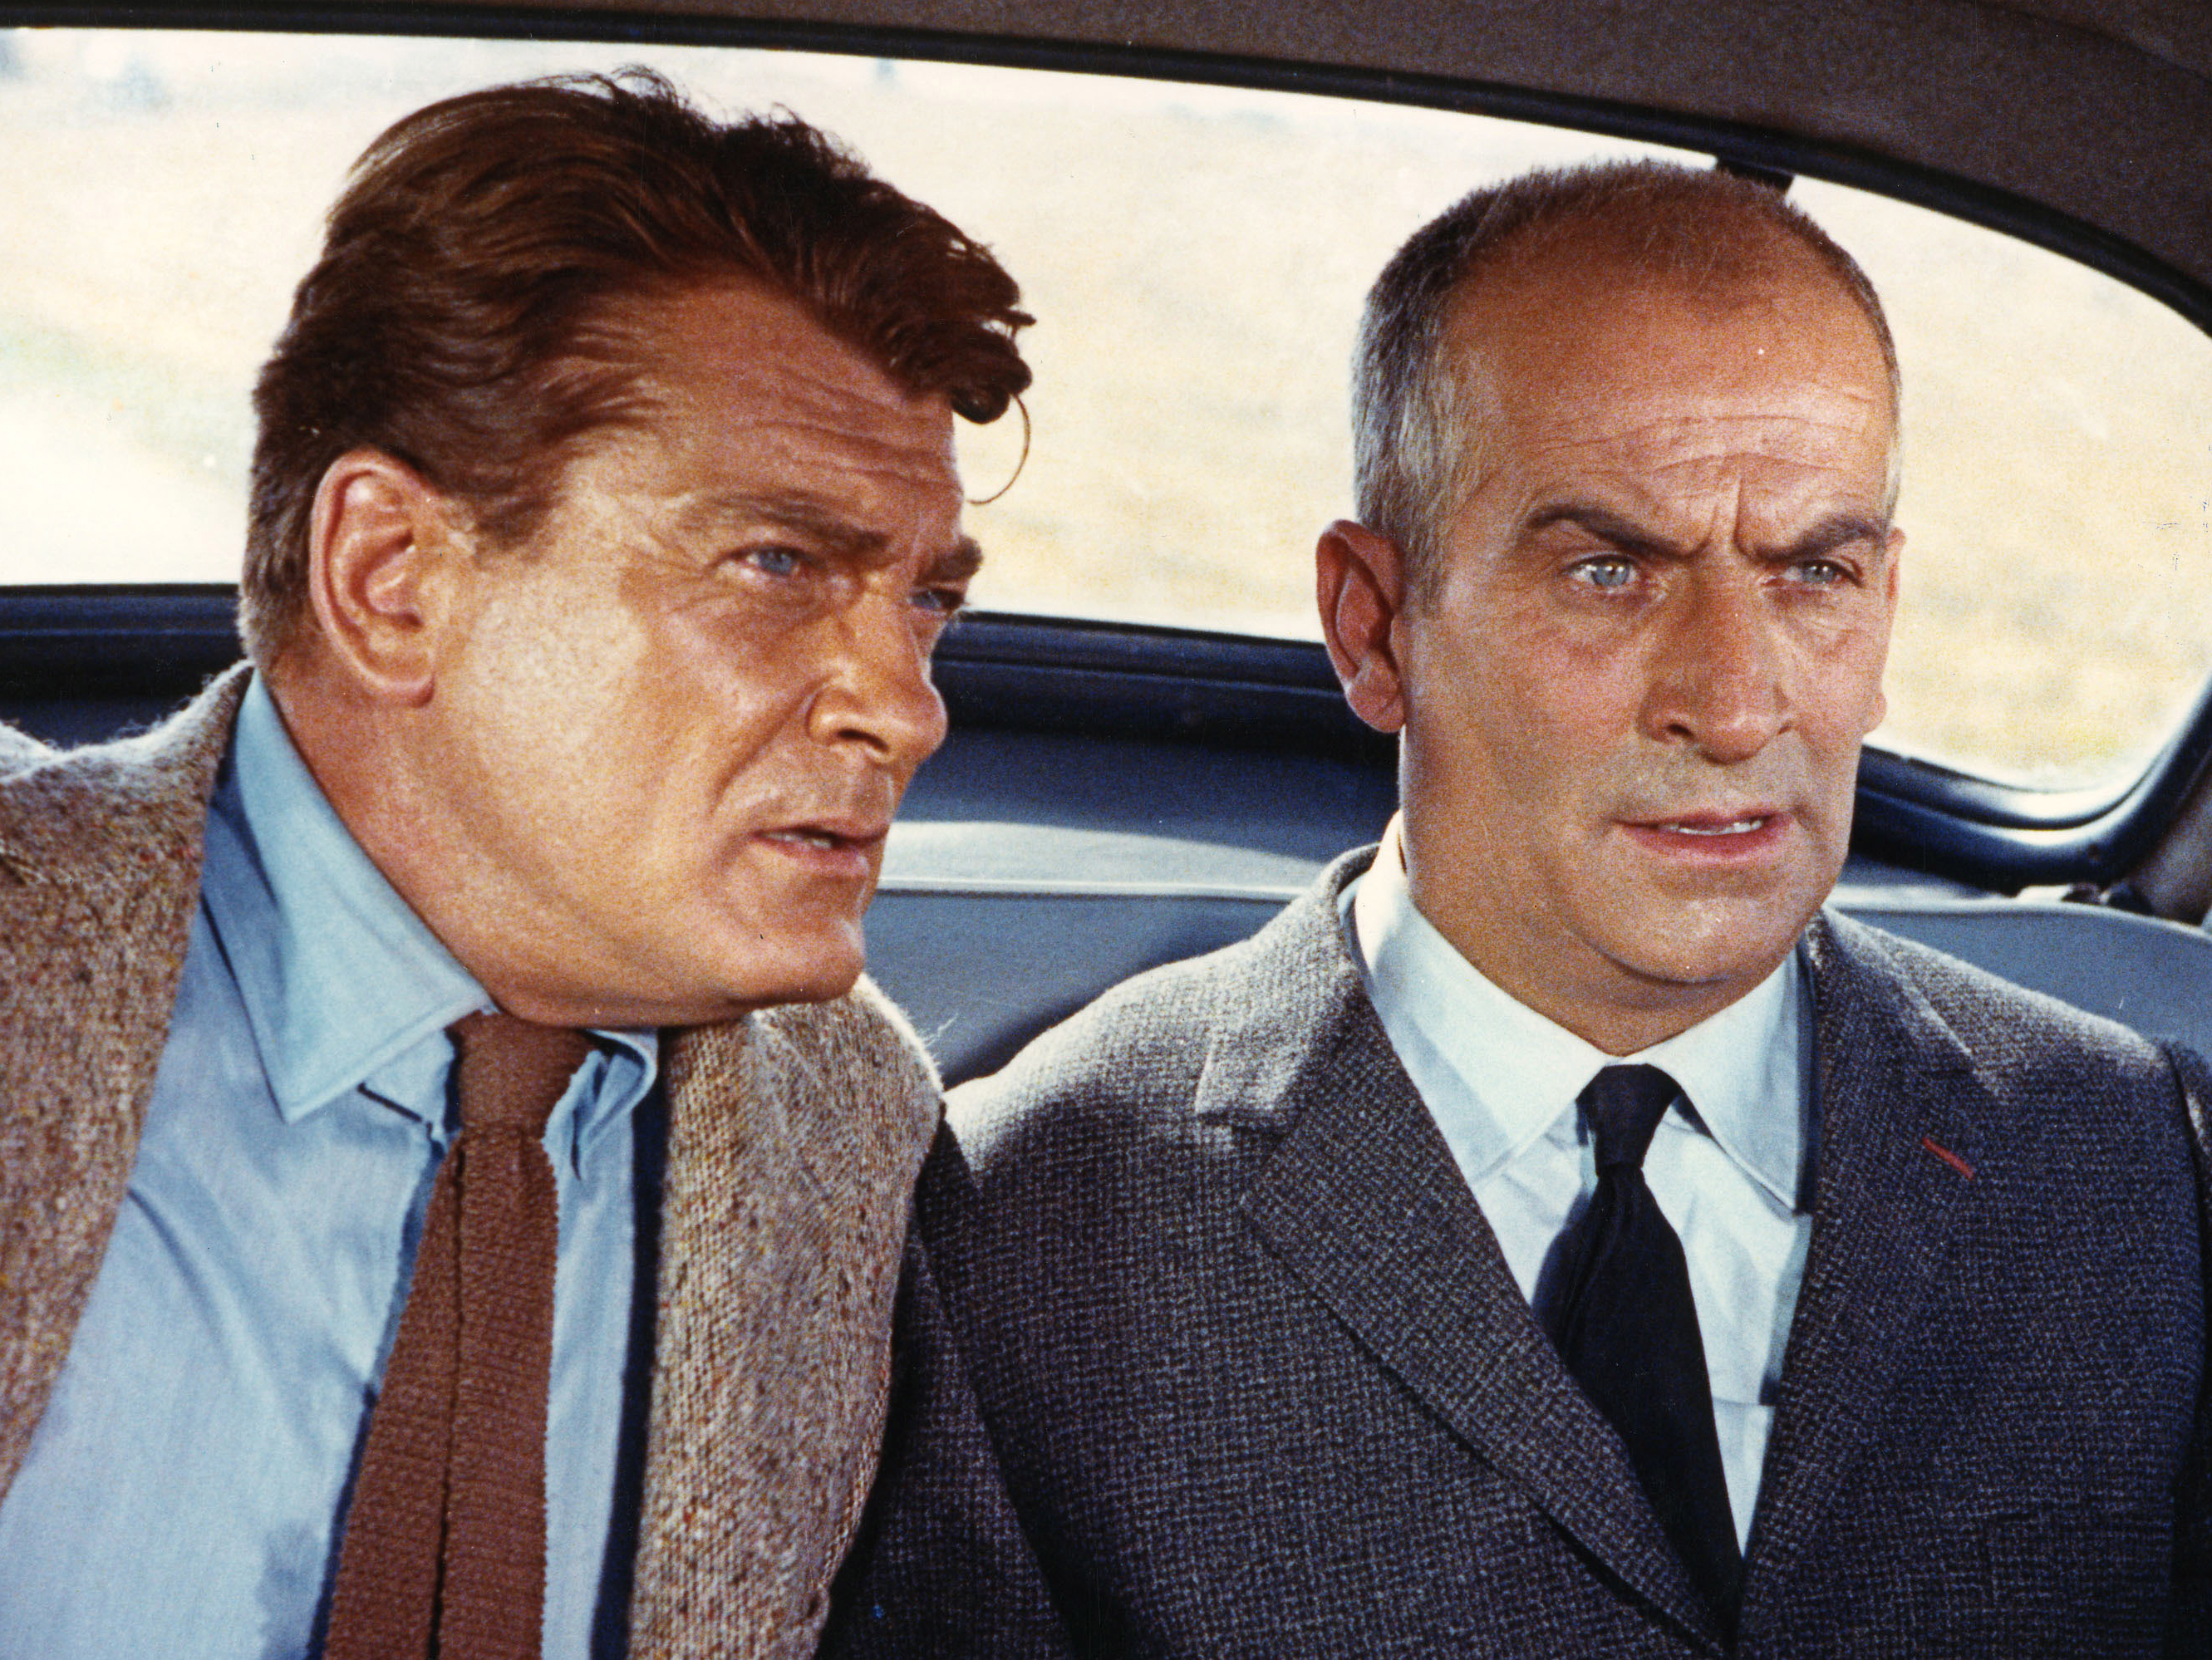 Men Actor Movies Fantomas Jean Marais French Vintage Film Stills Suits Car Interior Tie 1960s Blue E 2662x1998